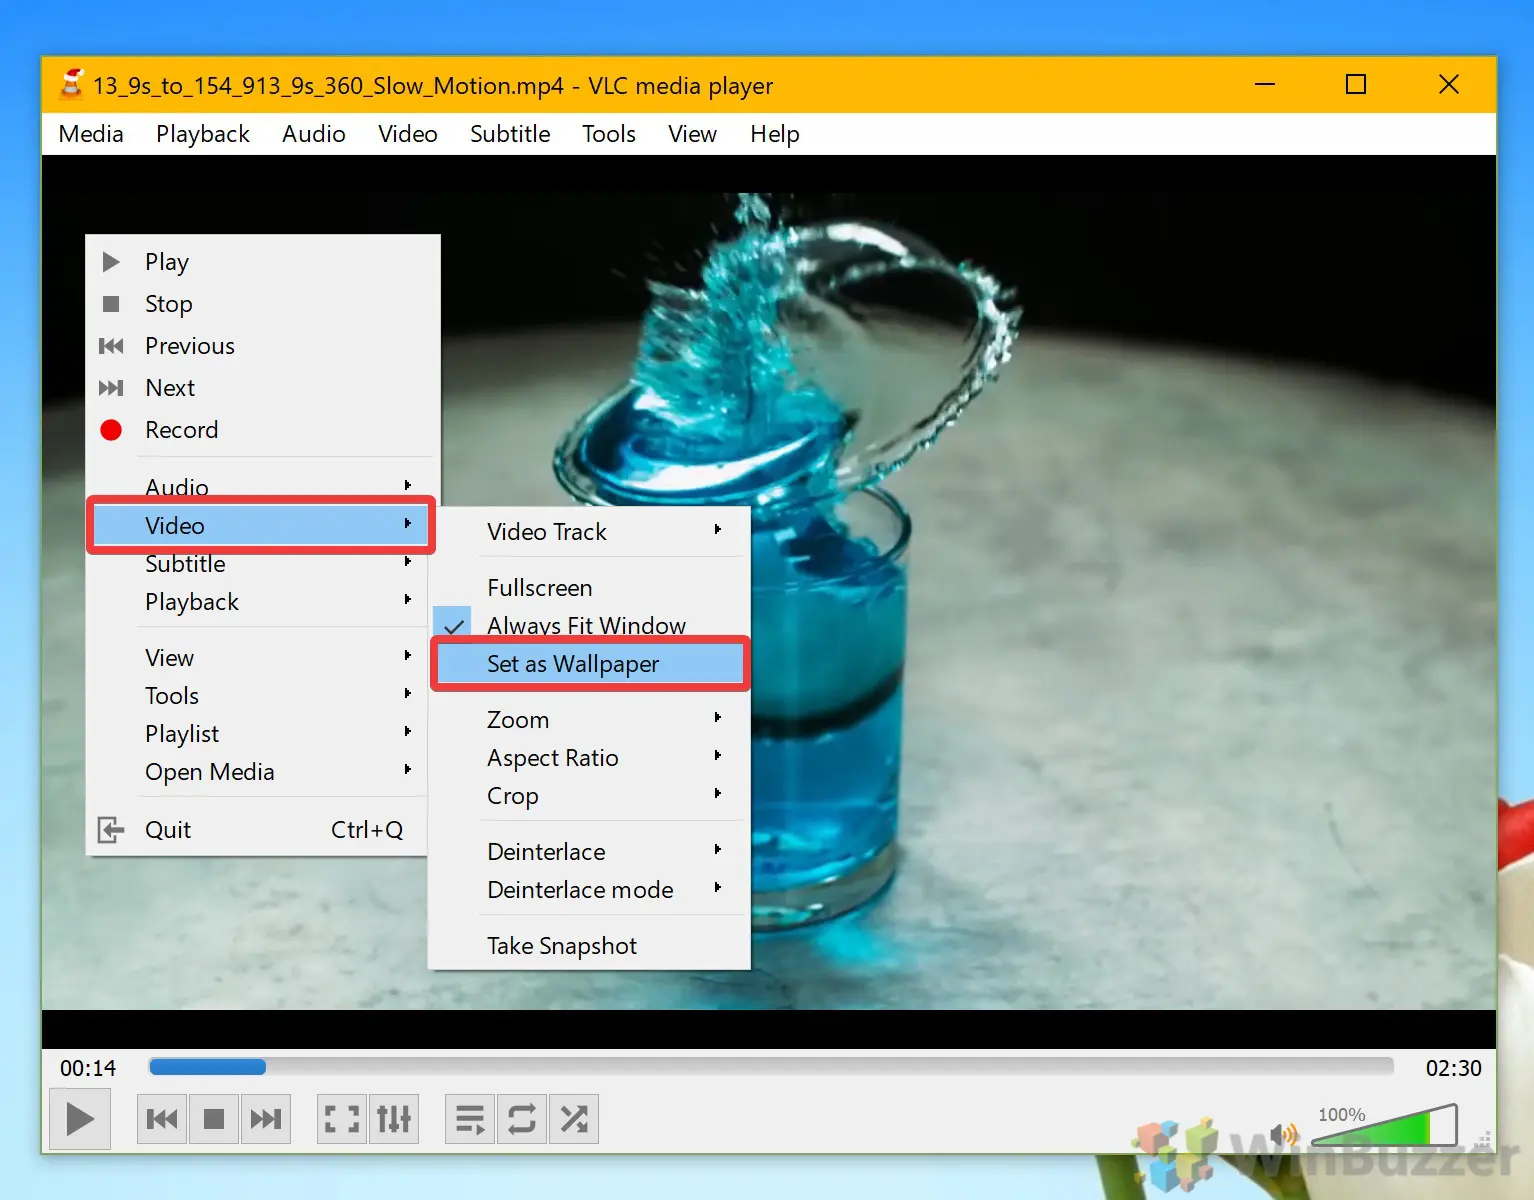 How to Set a Video as a Live Desktop Wallpaper in Windows 10 - WinBuzzer